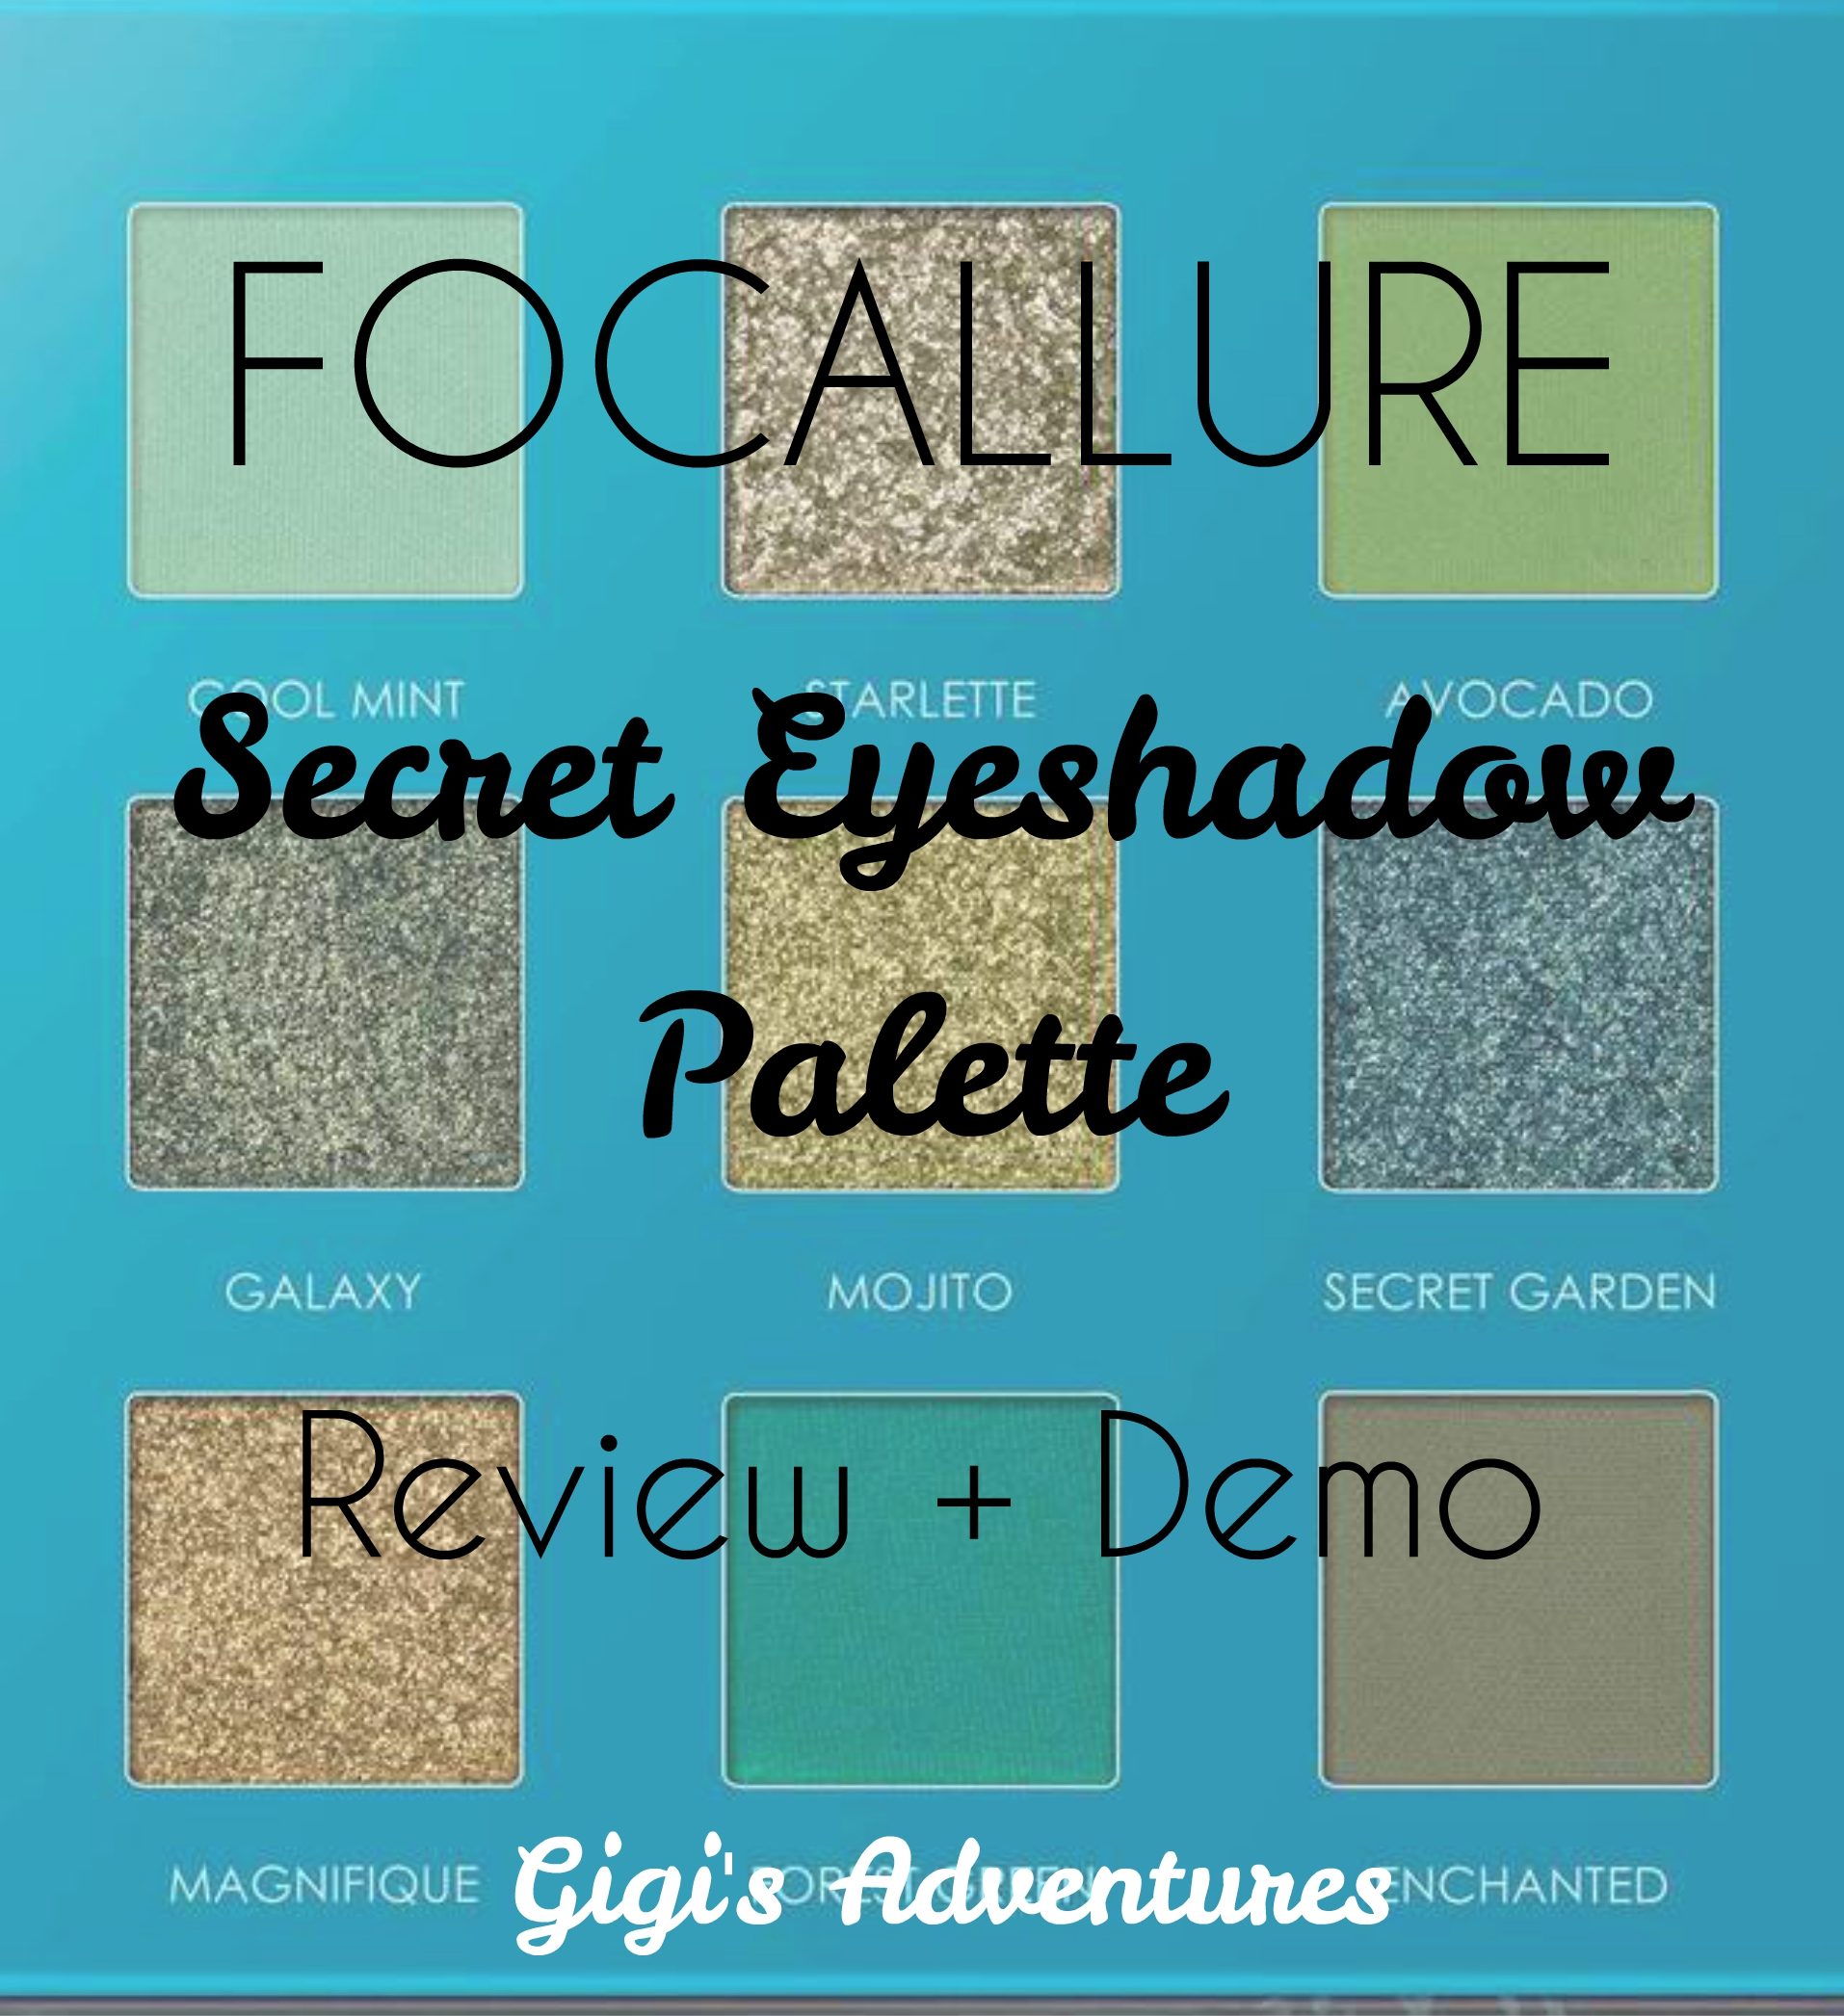 Focallure 9-Pan Eyeshadow Palette #5 Secret Review + 3 looks Demo